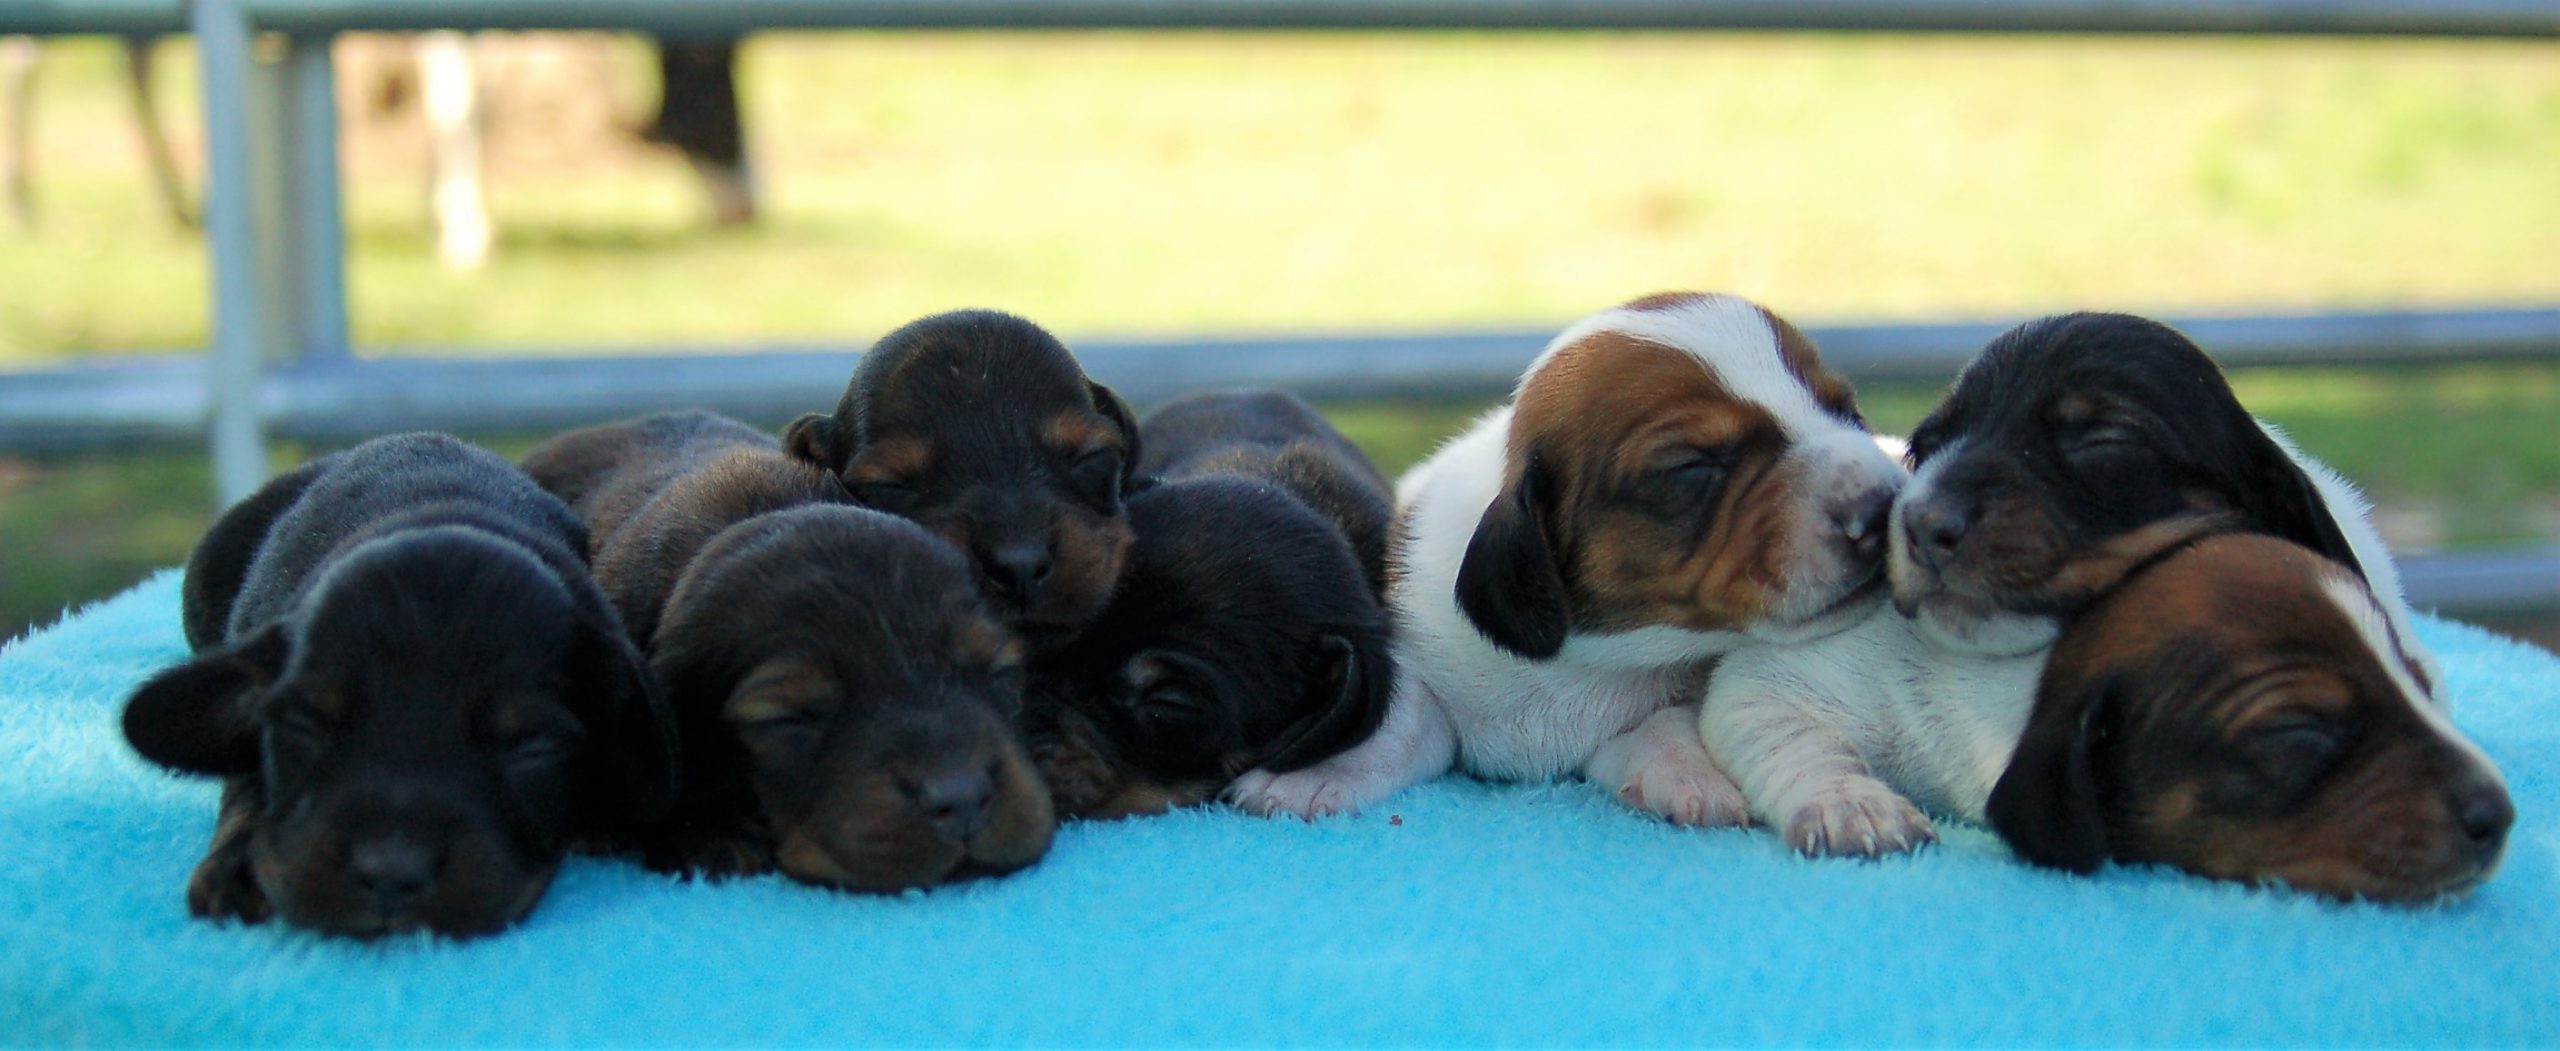 Miss Teagan Louise & Mister Luke Duke – AKC Miniature Dachshund Puppies